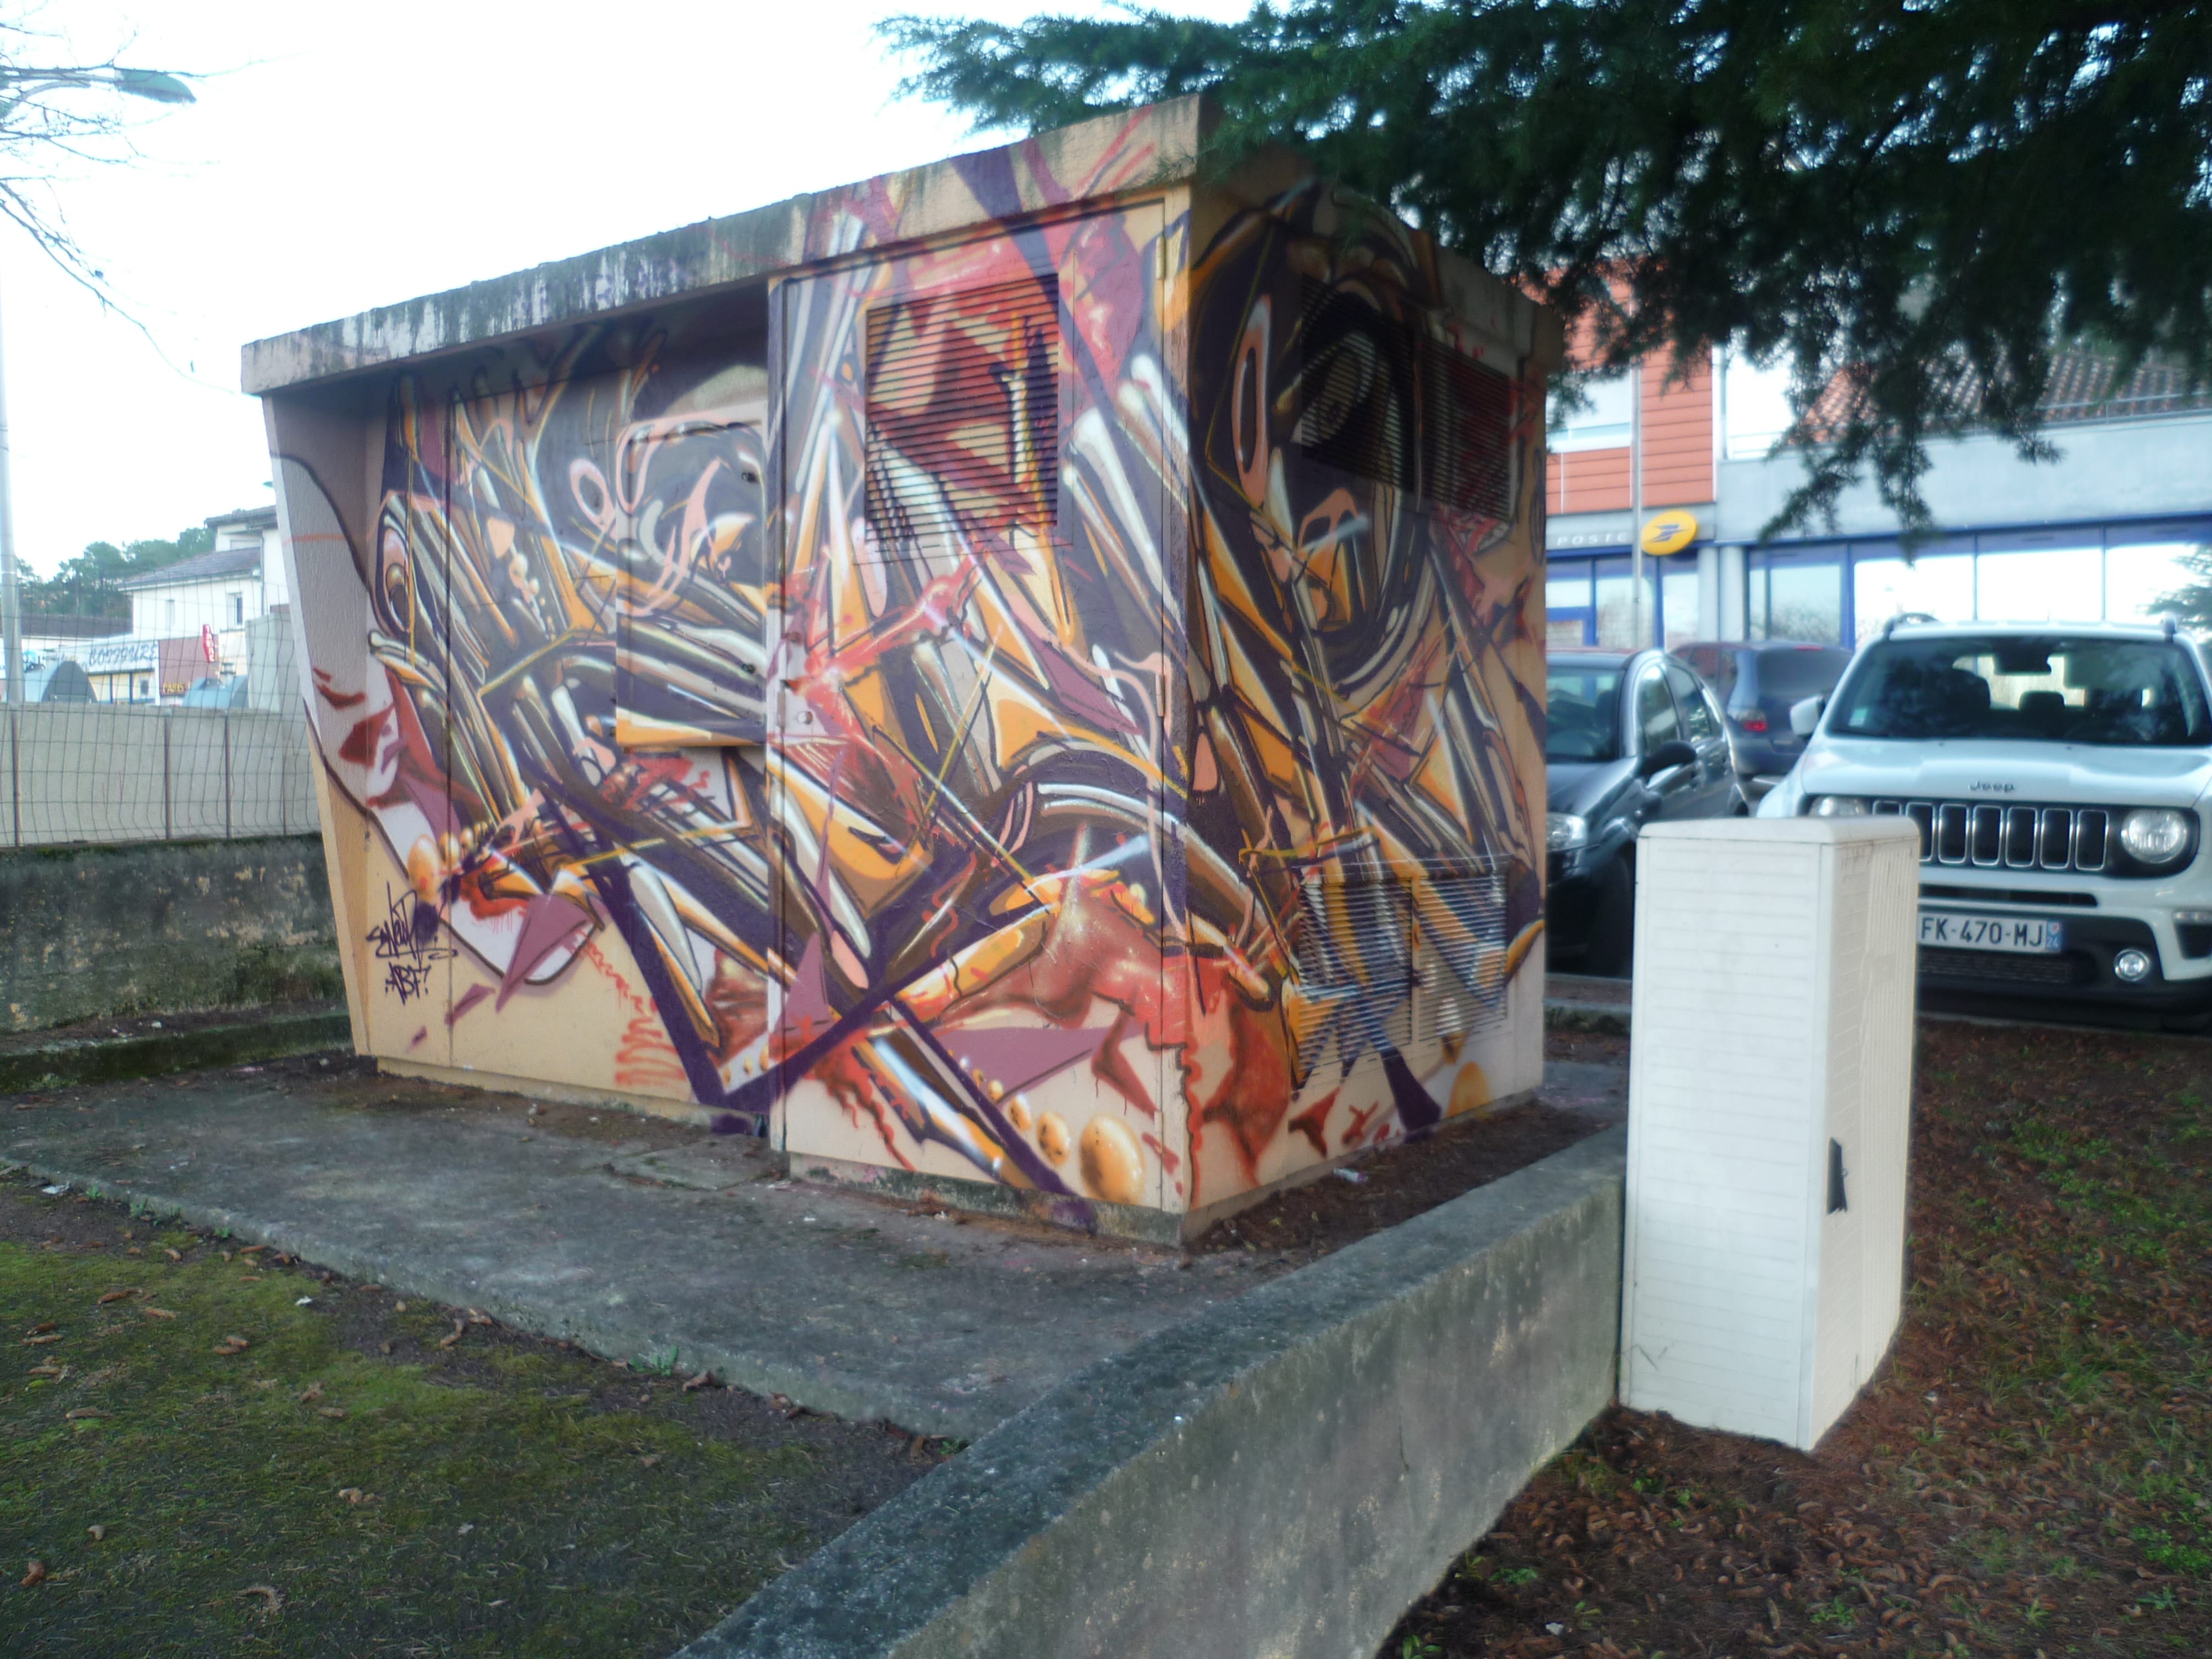 Graffiti 5653 #neurabf captured by Neur Abf in Marsac-sur-l'Isle France